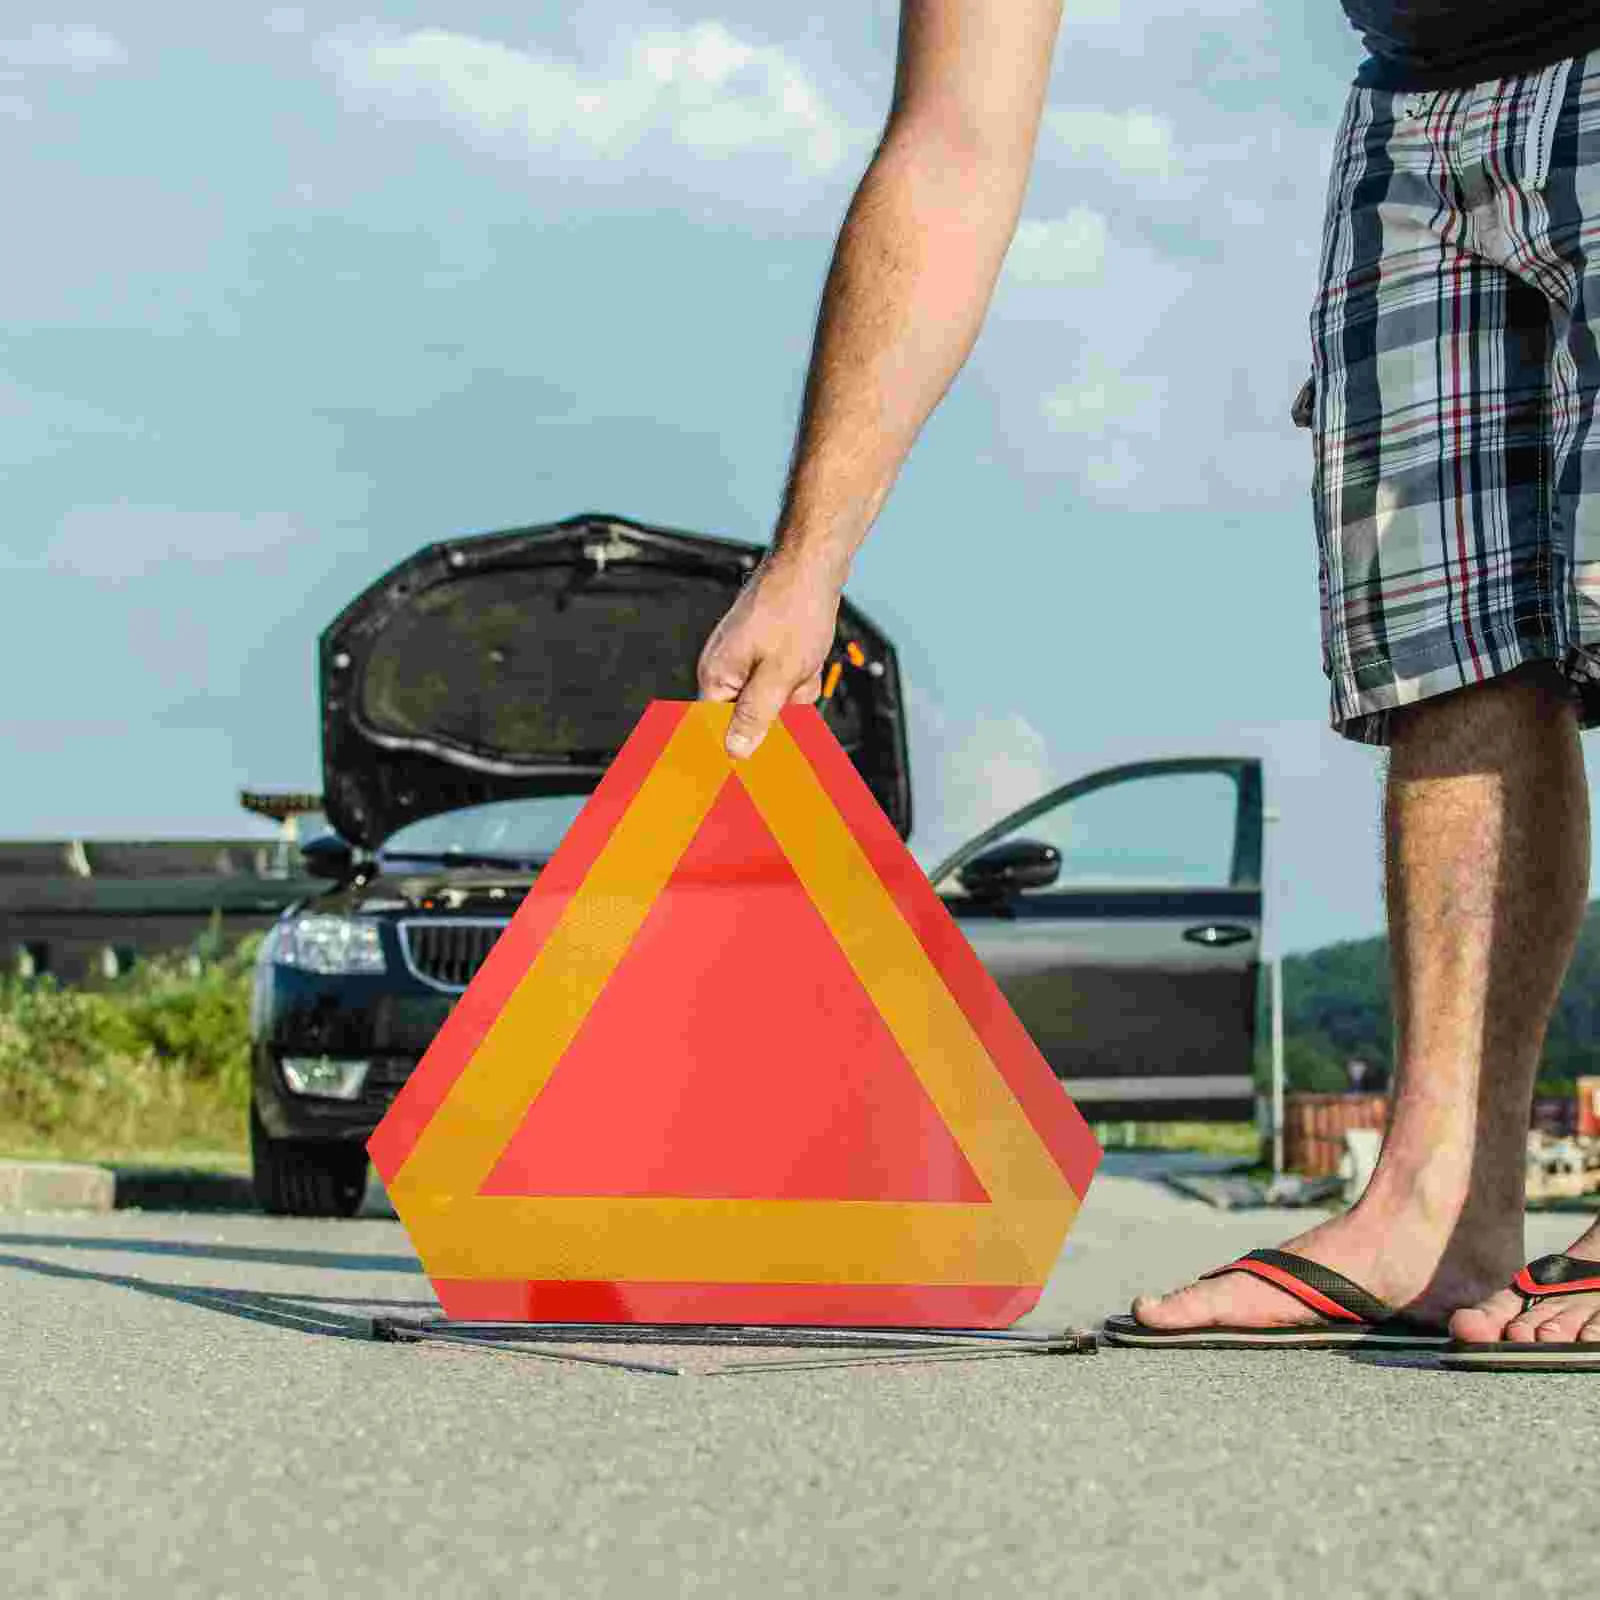 

Car Emblem Triangular Reflector Vehicle Triangle Warning Signs Safety Slow Moving Car Reflectors